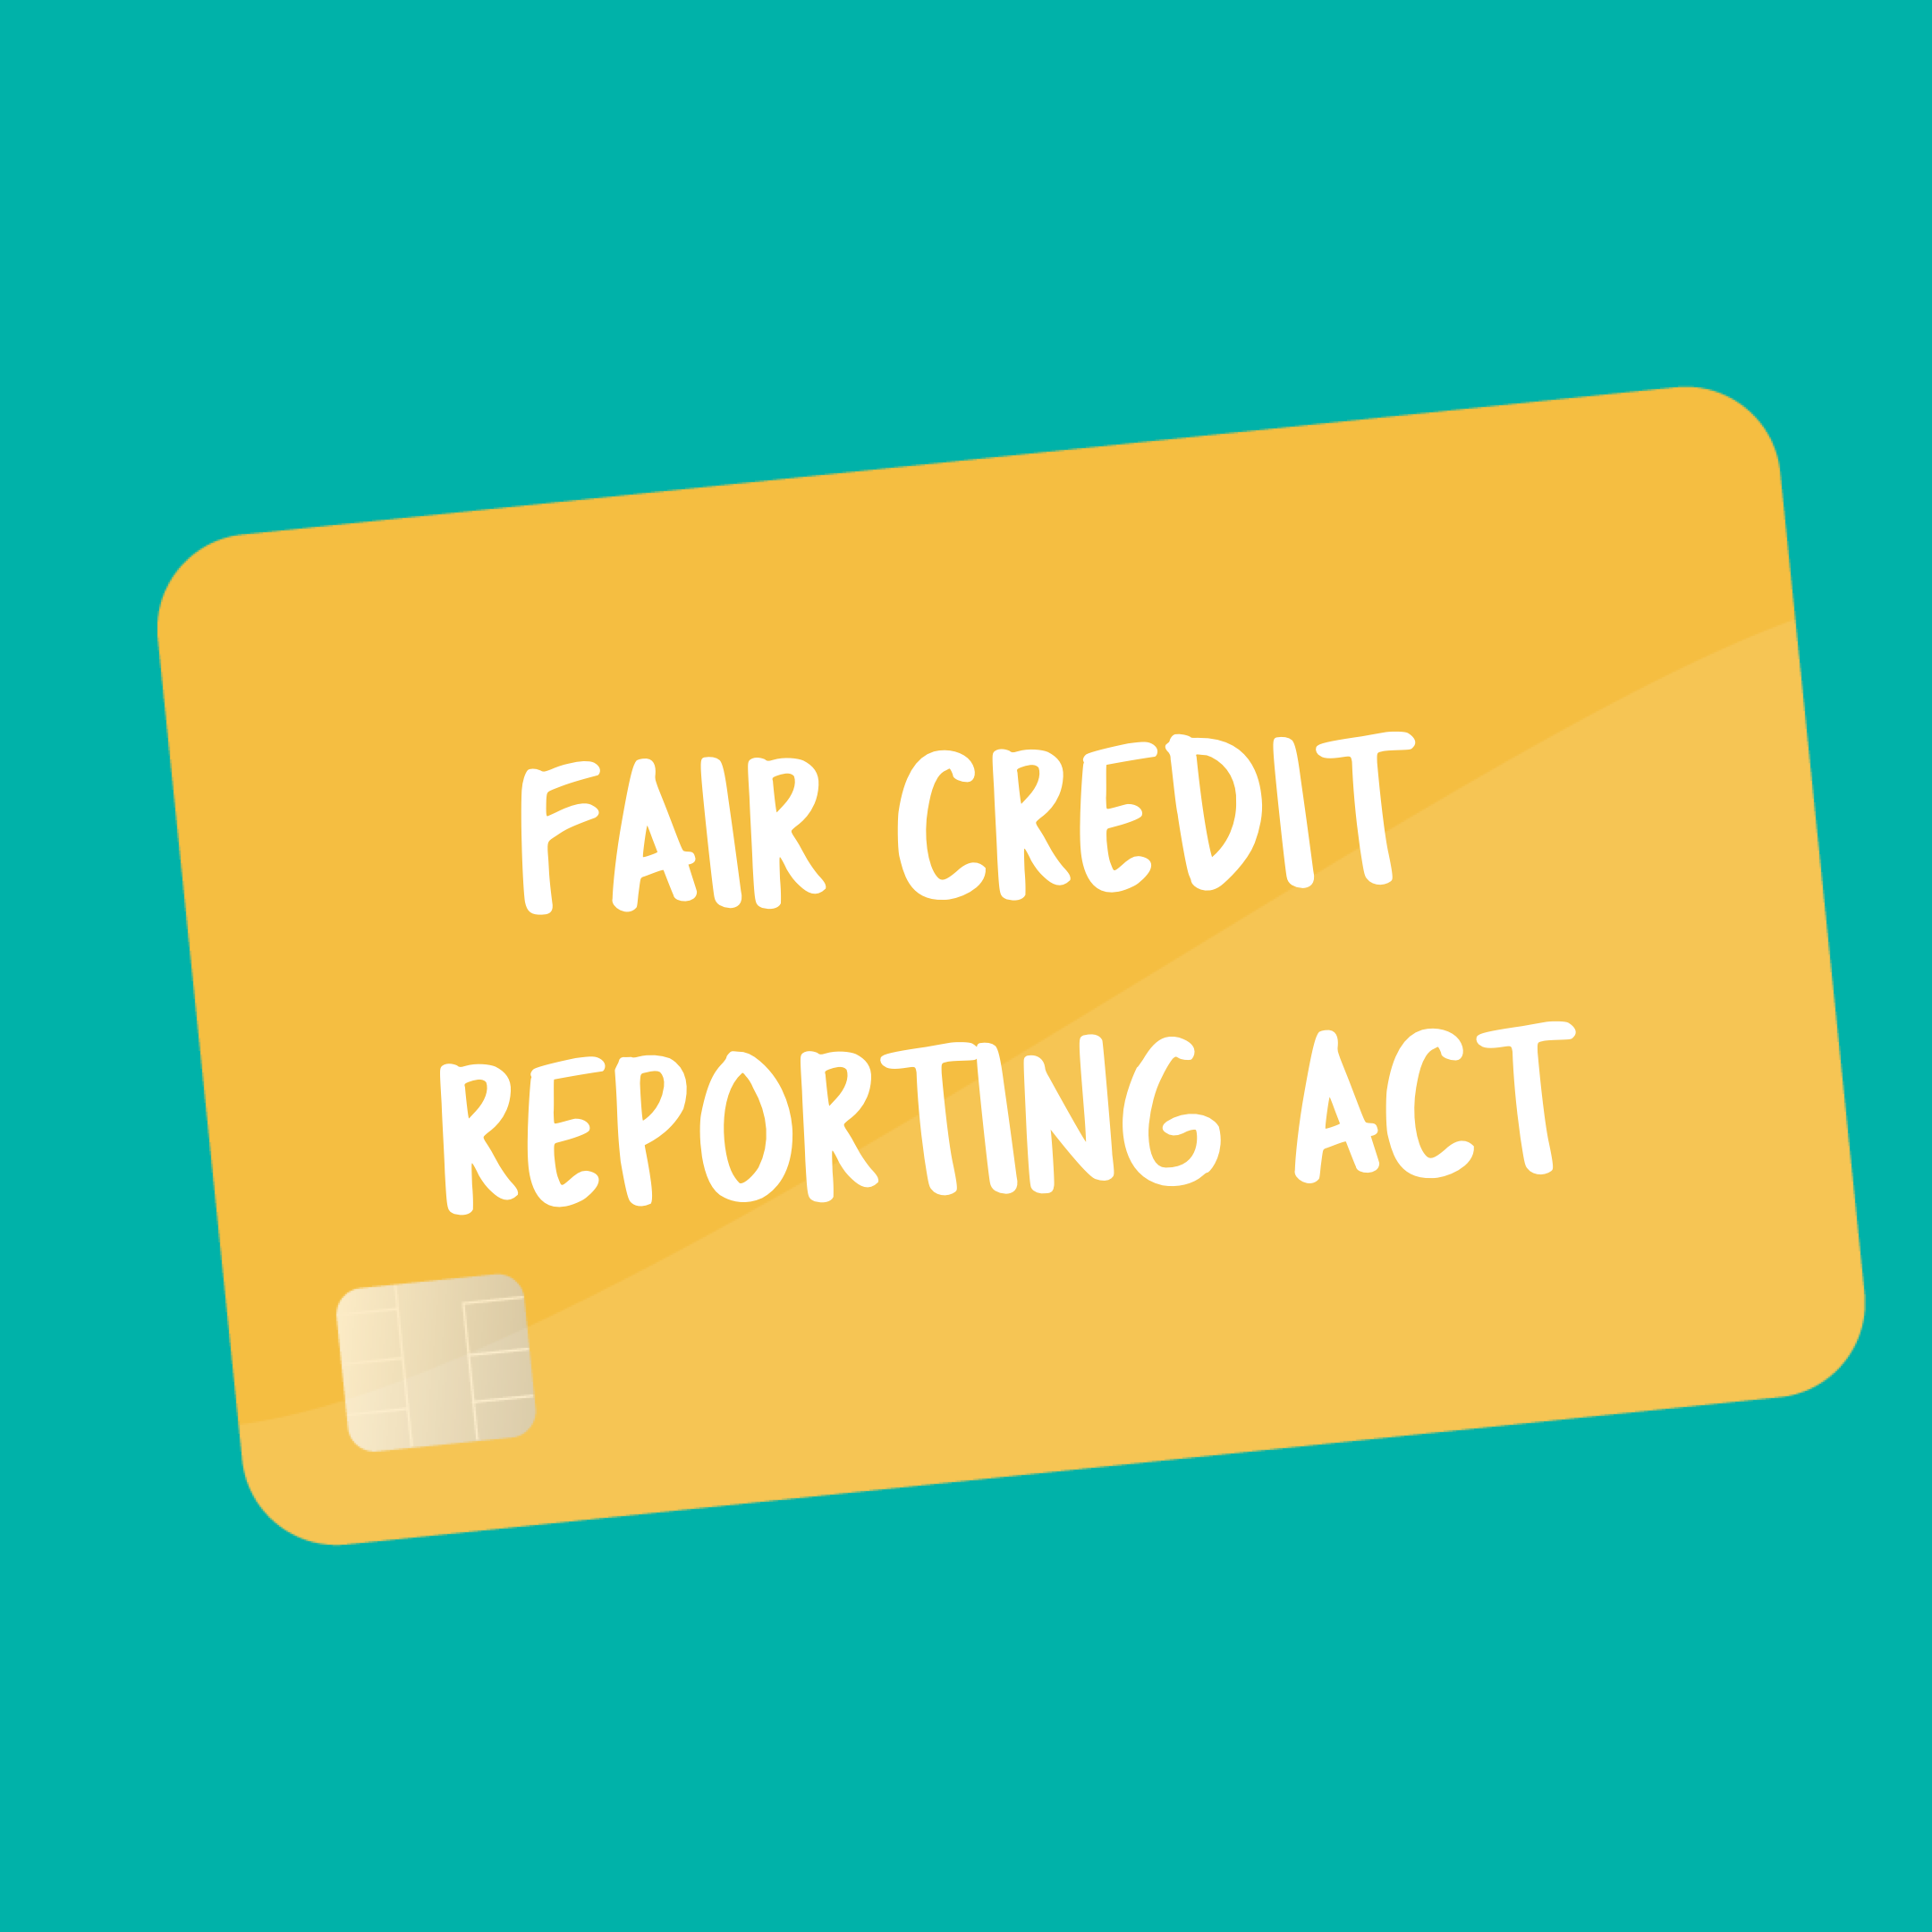 fair credit reporting act flashcard